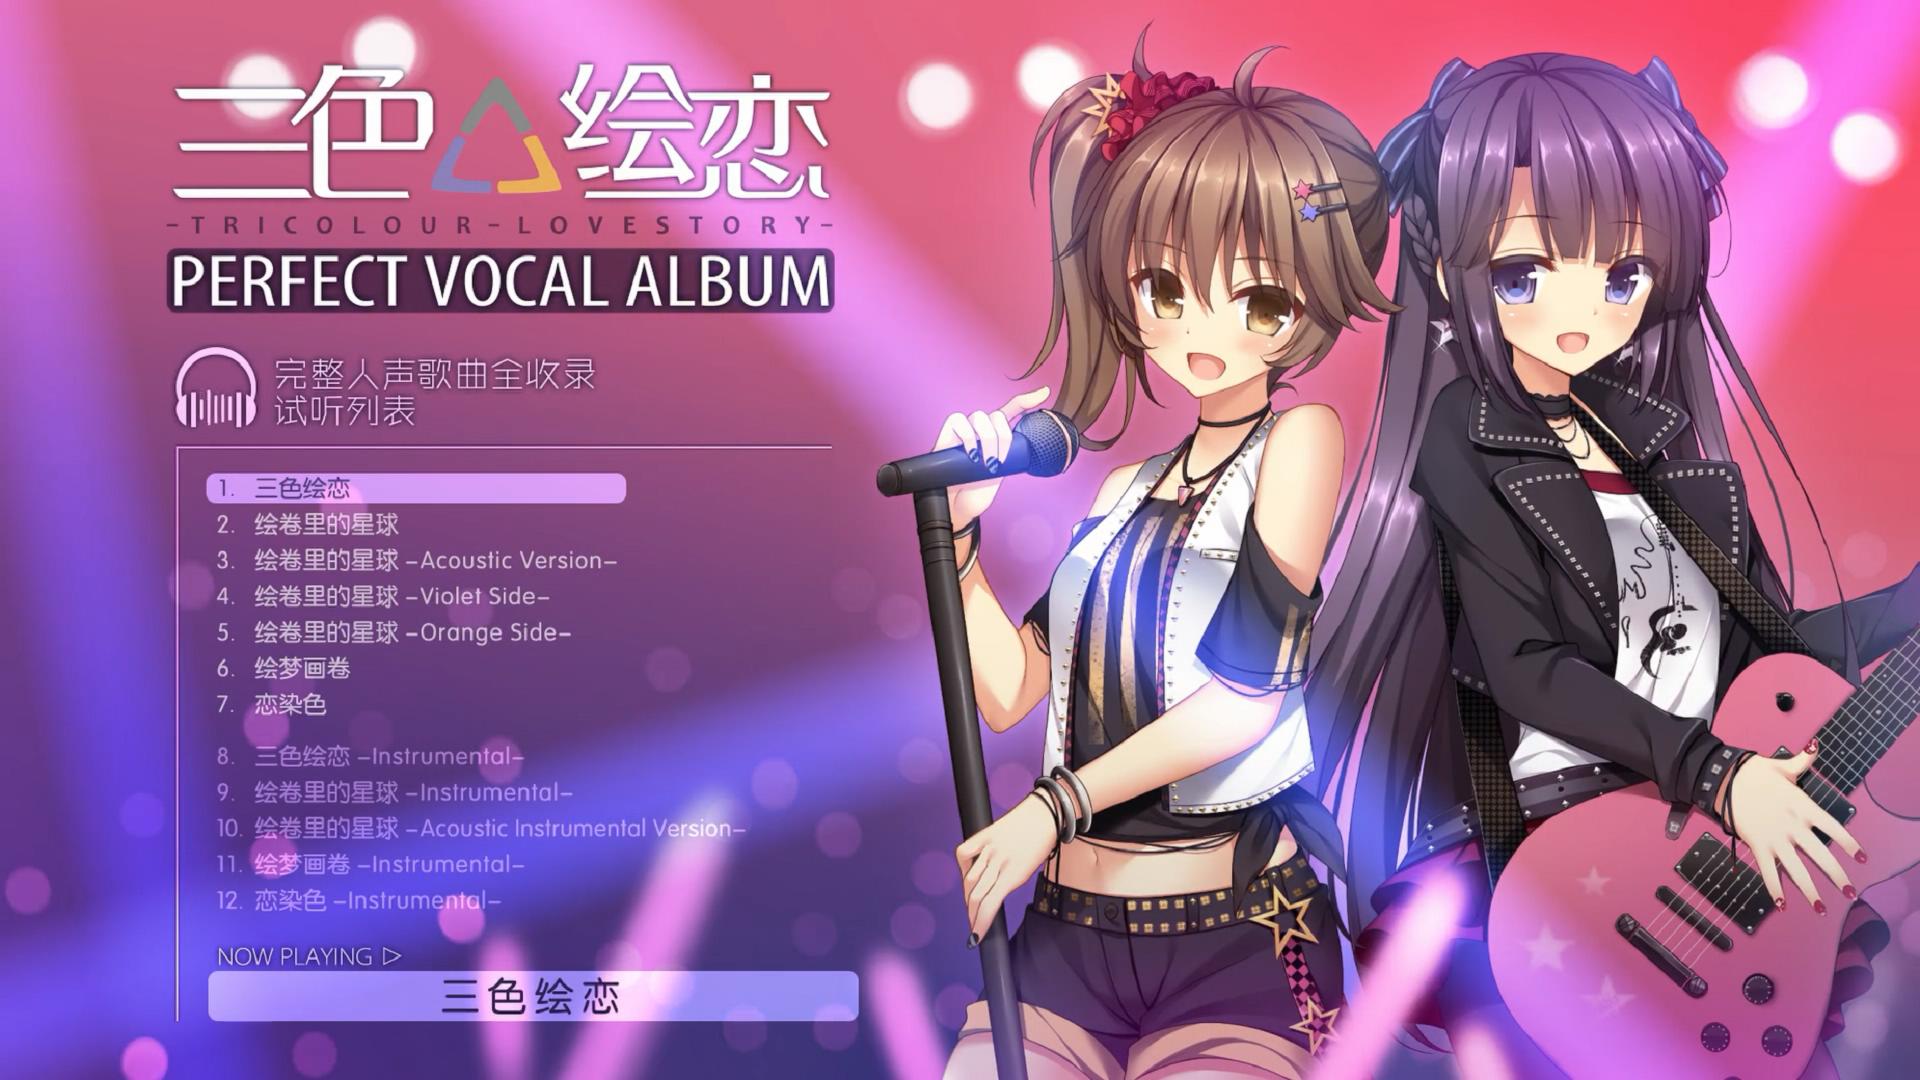 Tricolour Lovestory Perfect Vocal Album screenshot